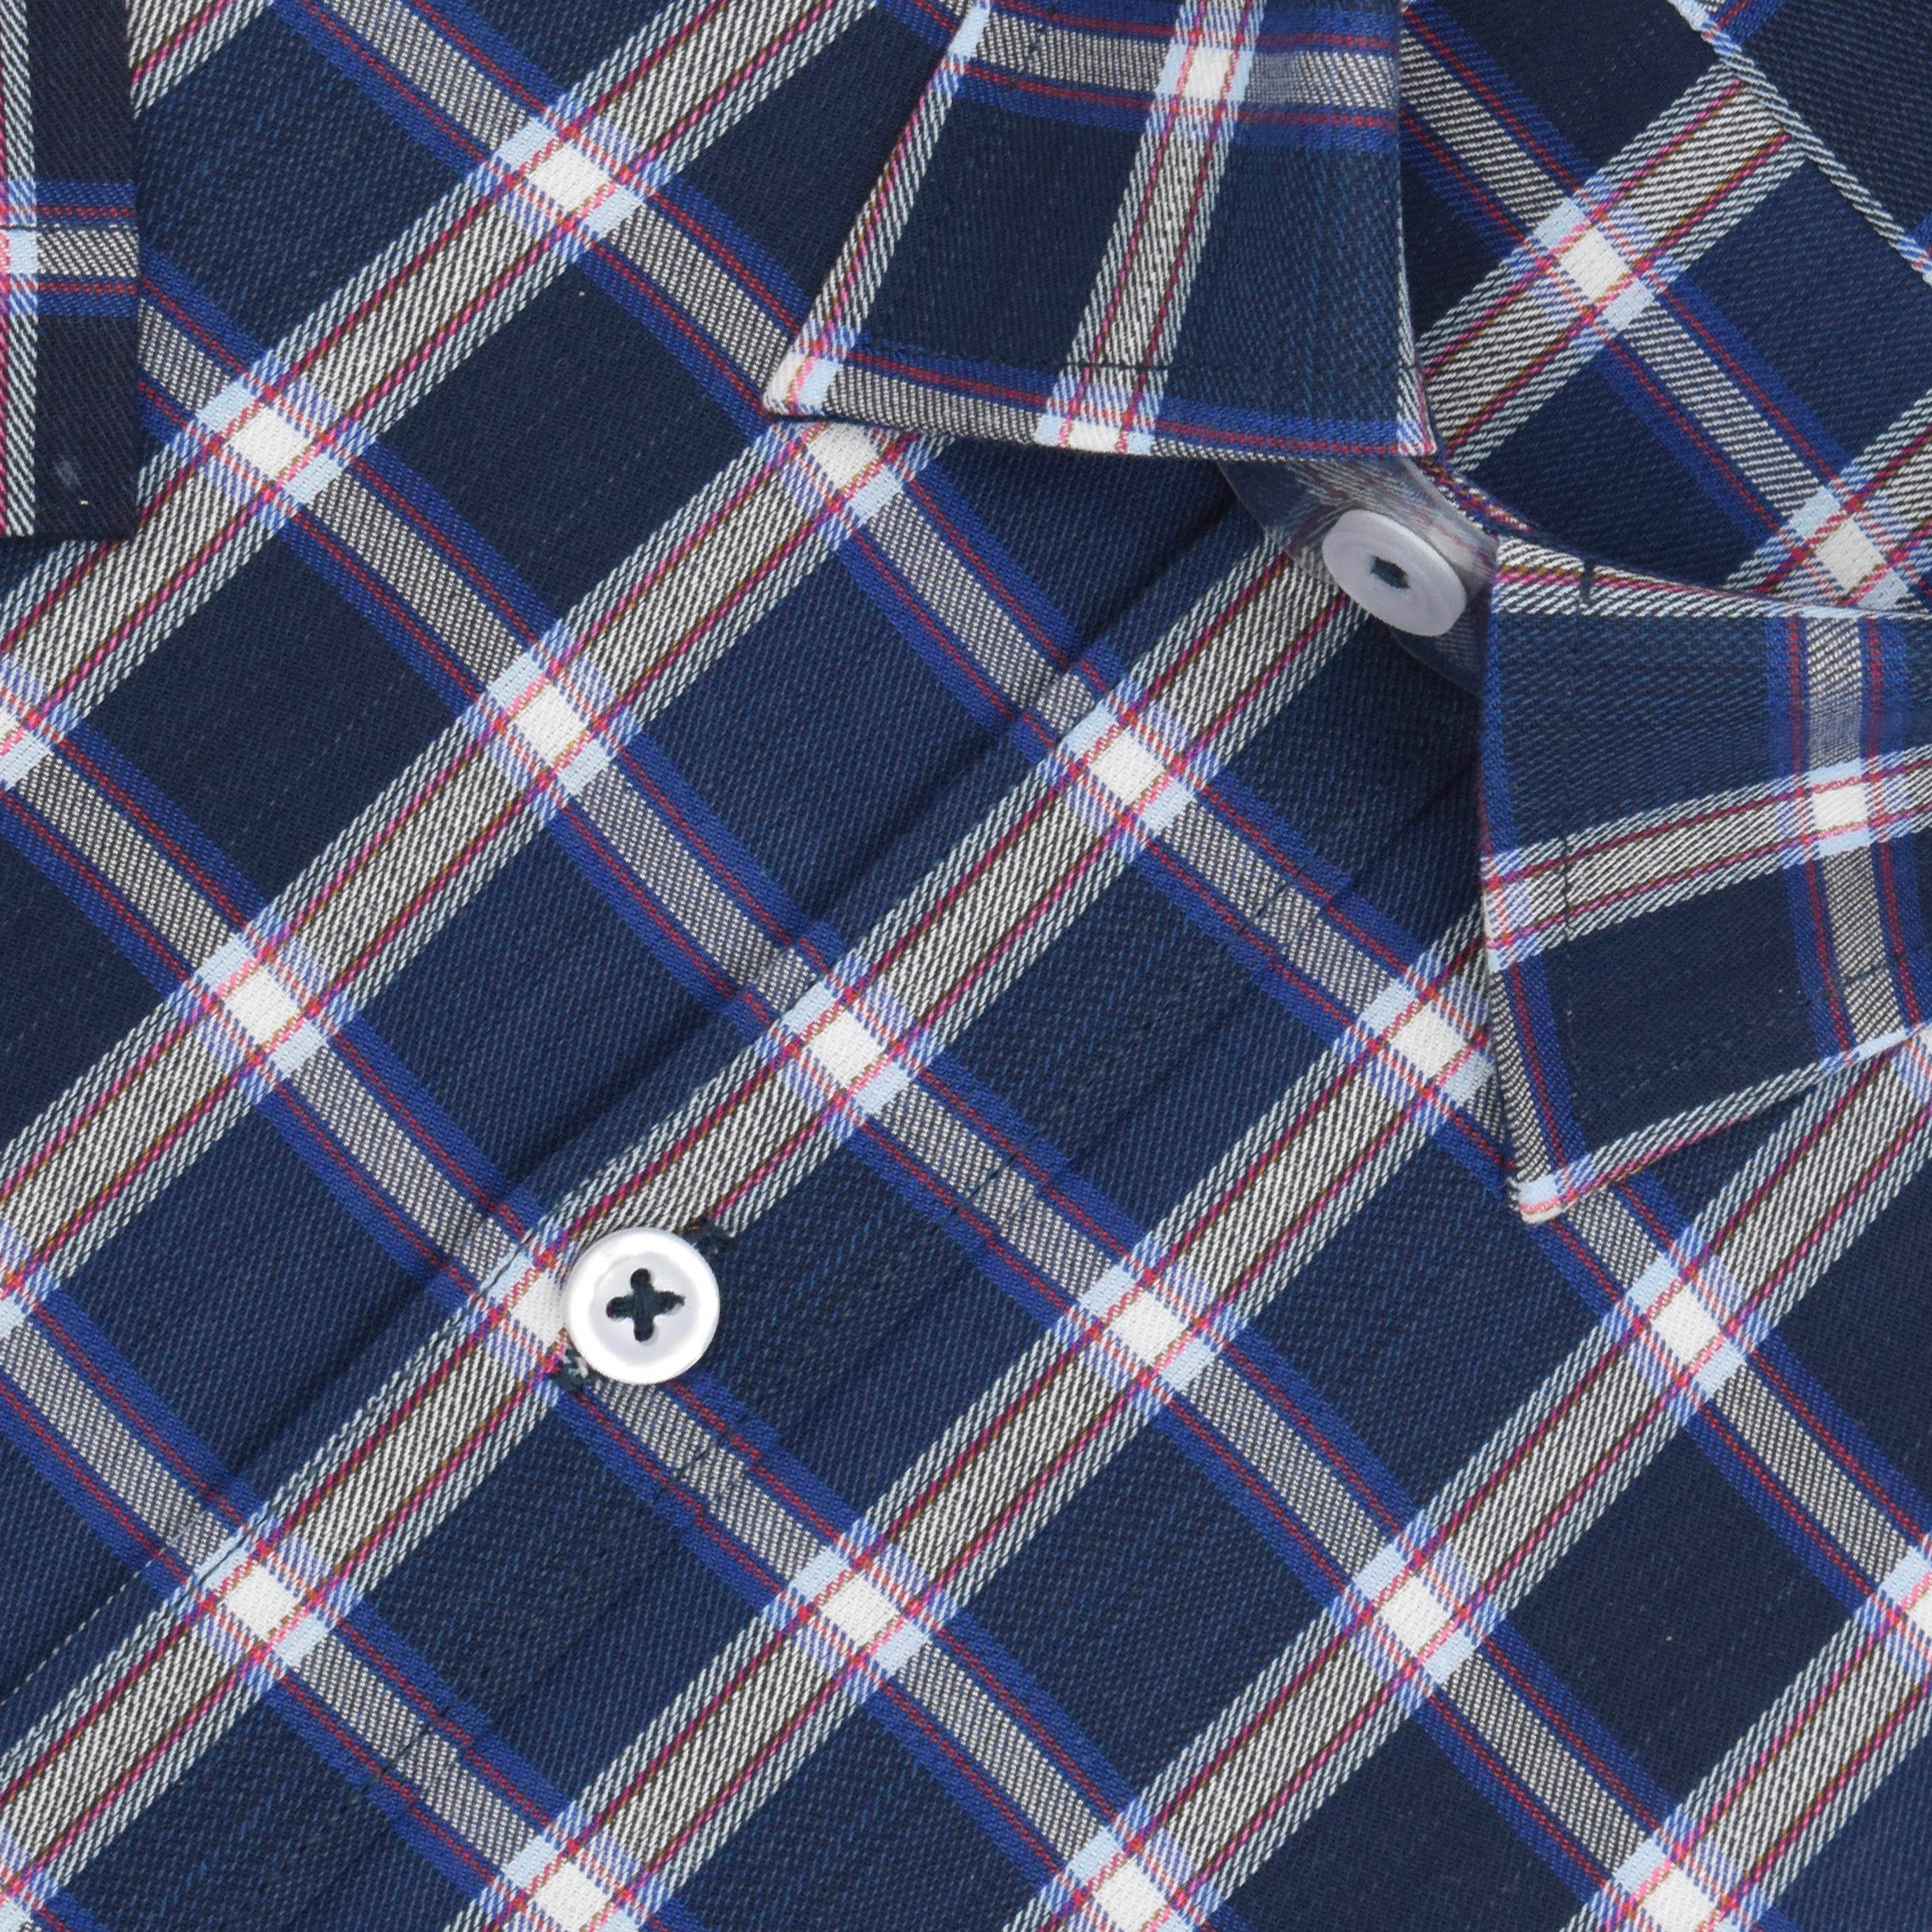 Men's 100% Cotton Grid Tattersall Checkered Half Sleeves Shirt (Navy)